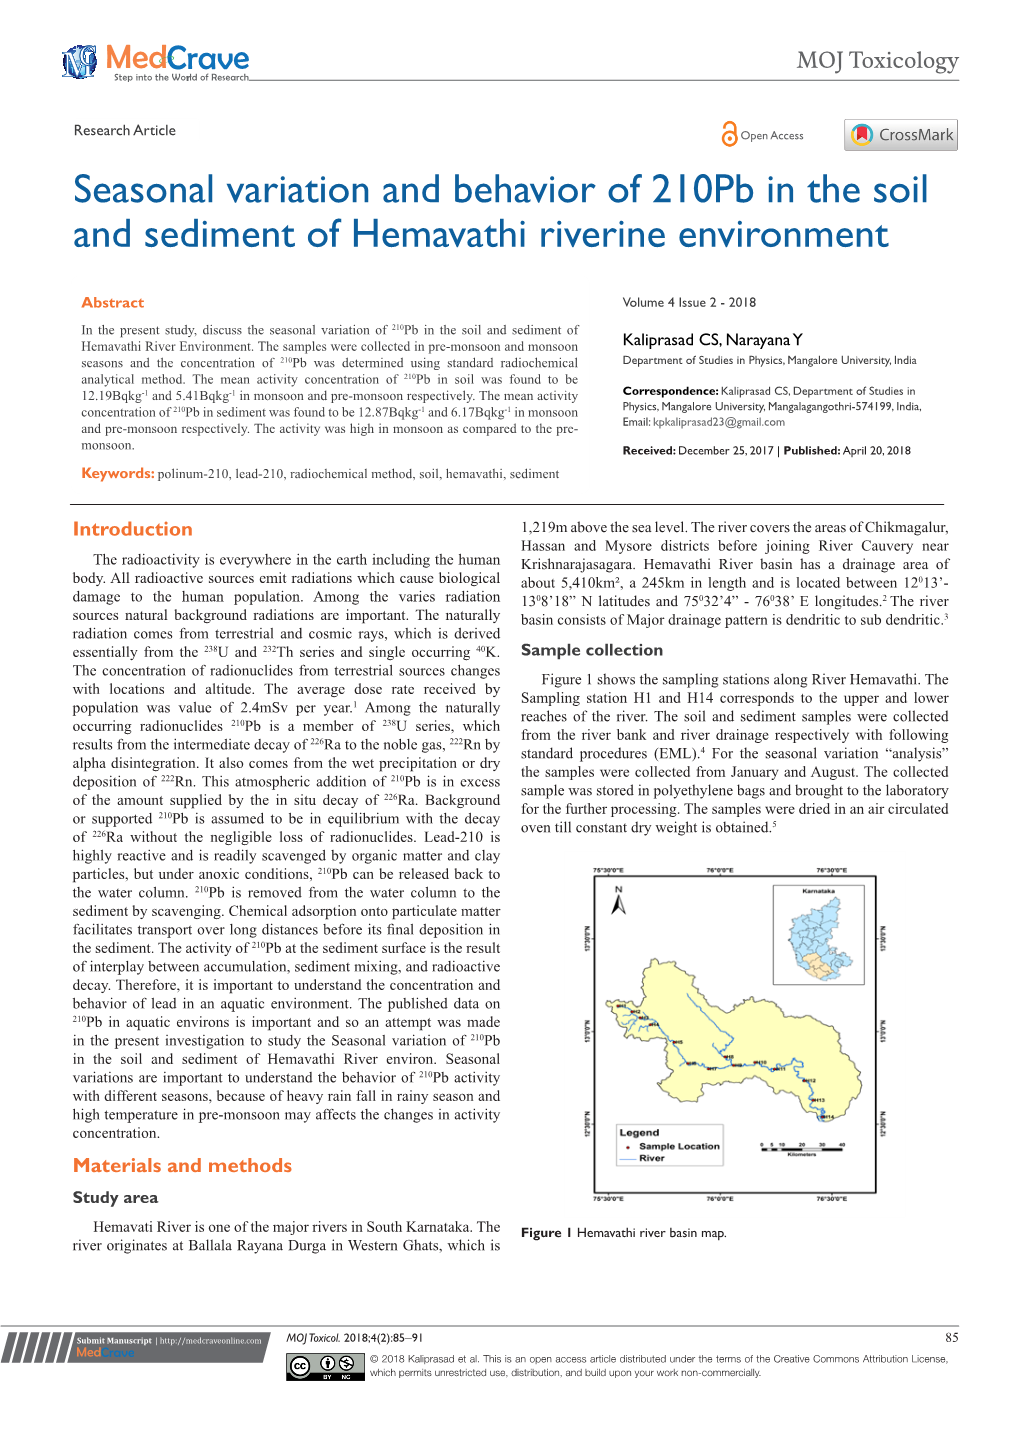 Seasonal Variation and Behavior of 210Pb in the Soil and Sediment of Hemavathi Riverine Environment